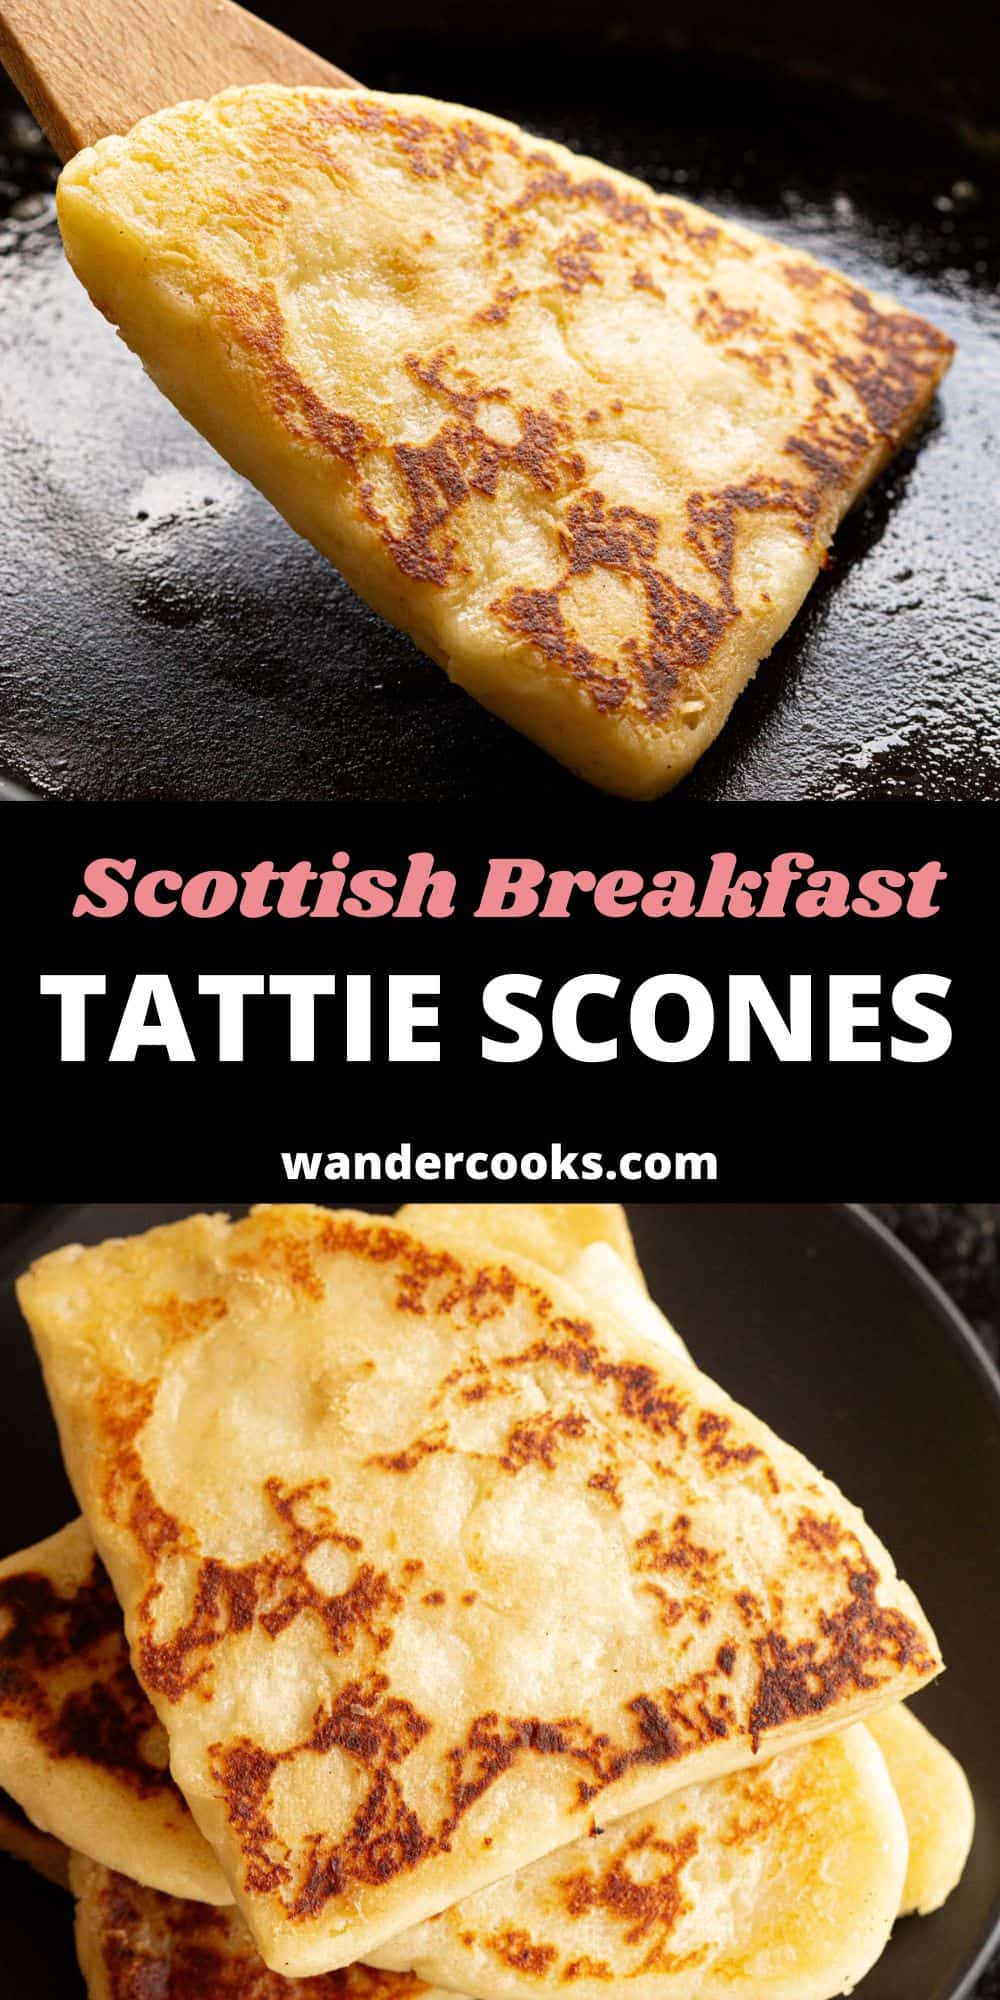 Tattie Scones - Scottish Potato Pancakes